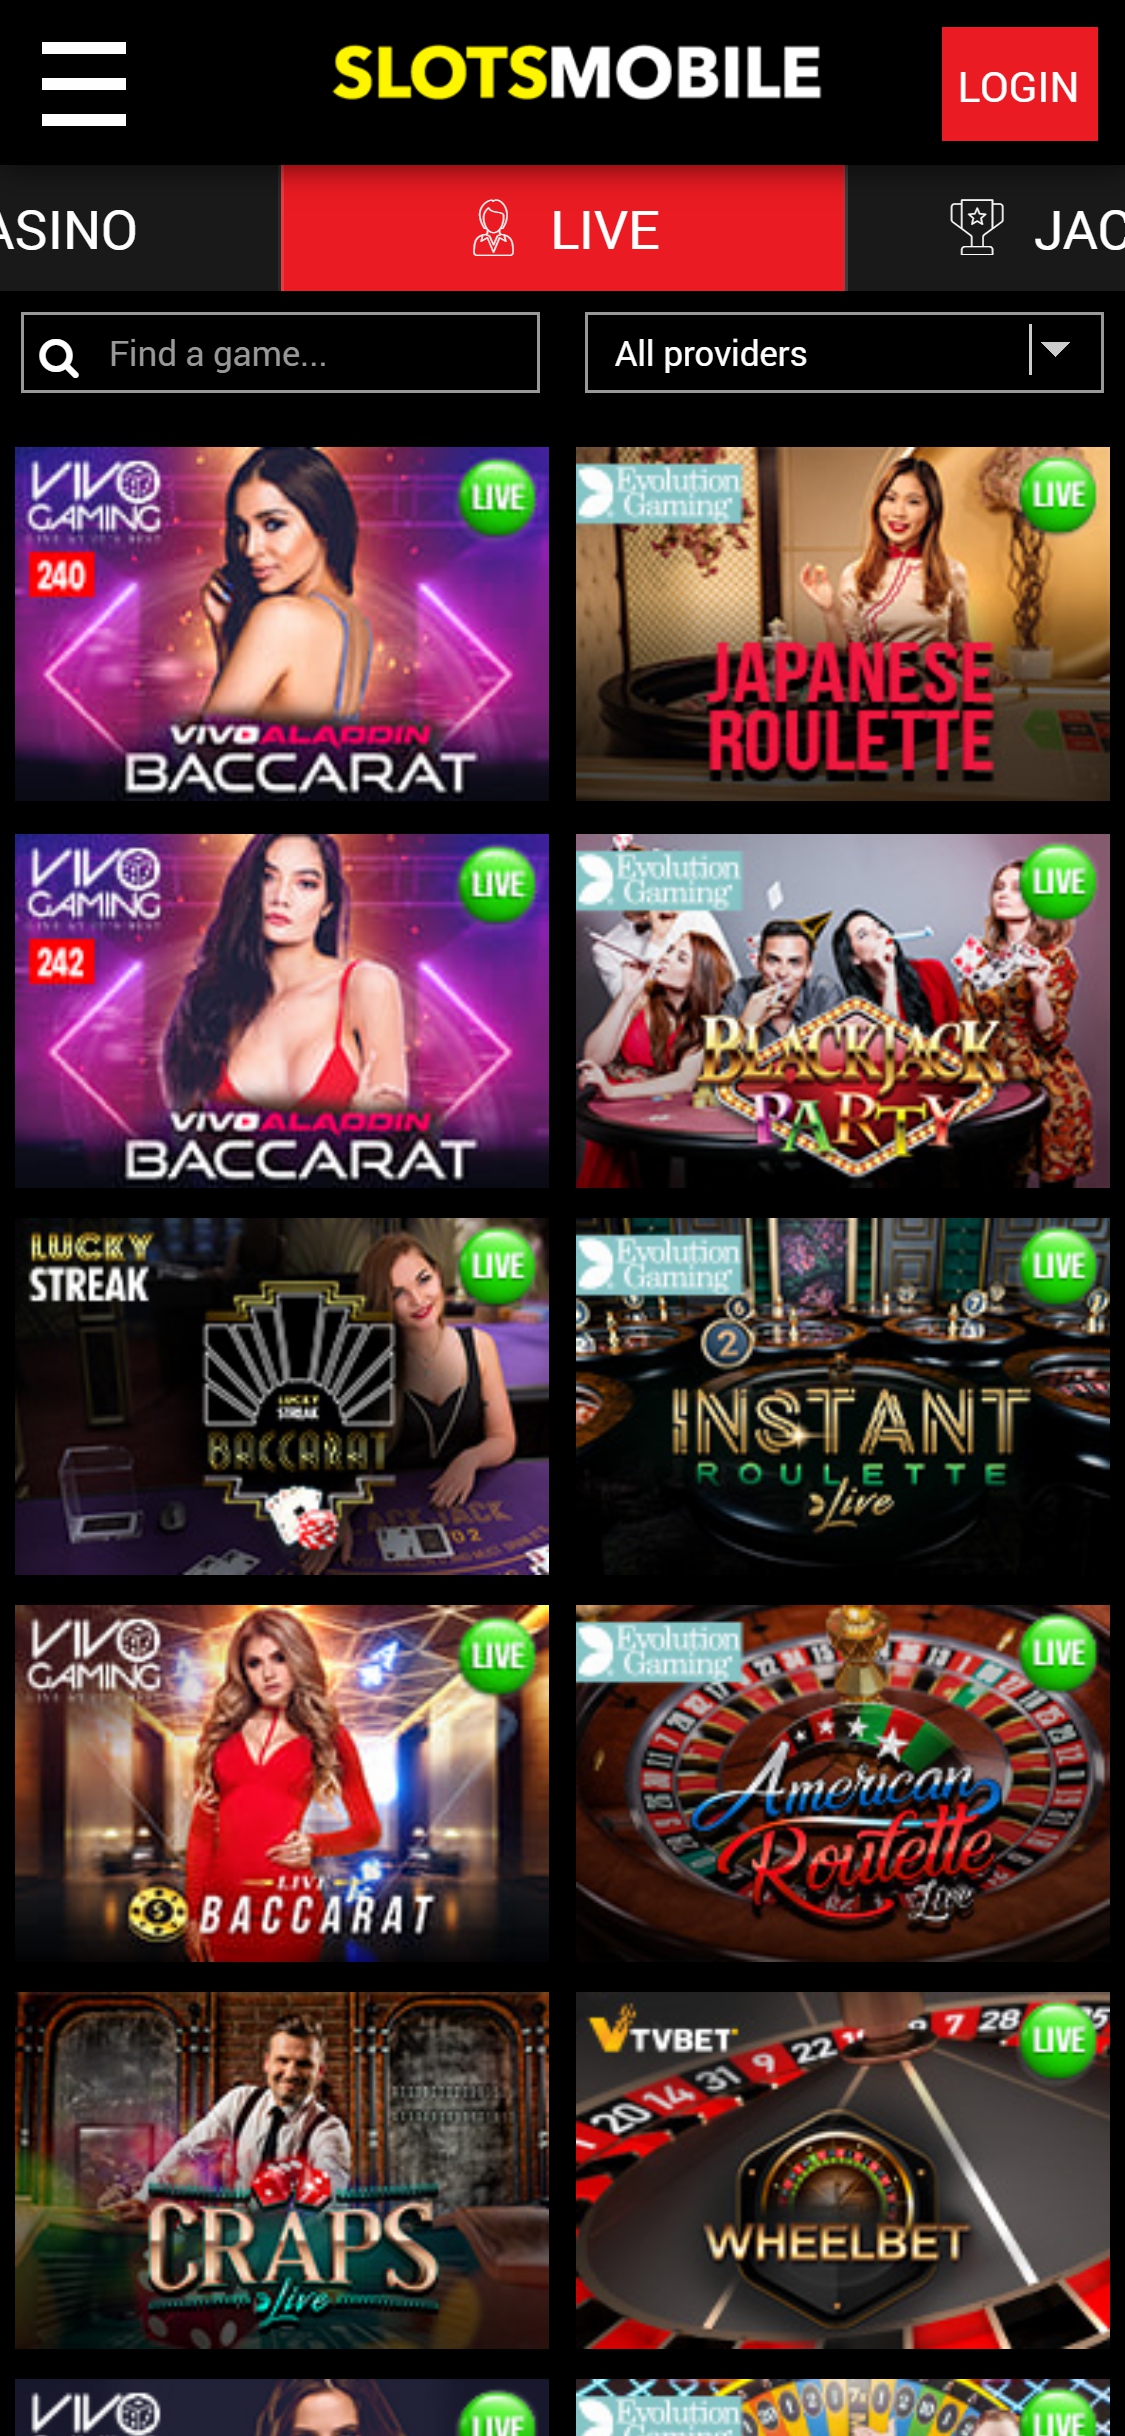 Slots Mobile Casino Mobile Live Dealer Games Review